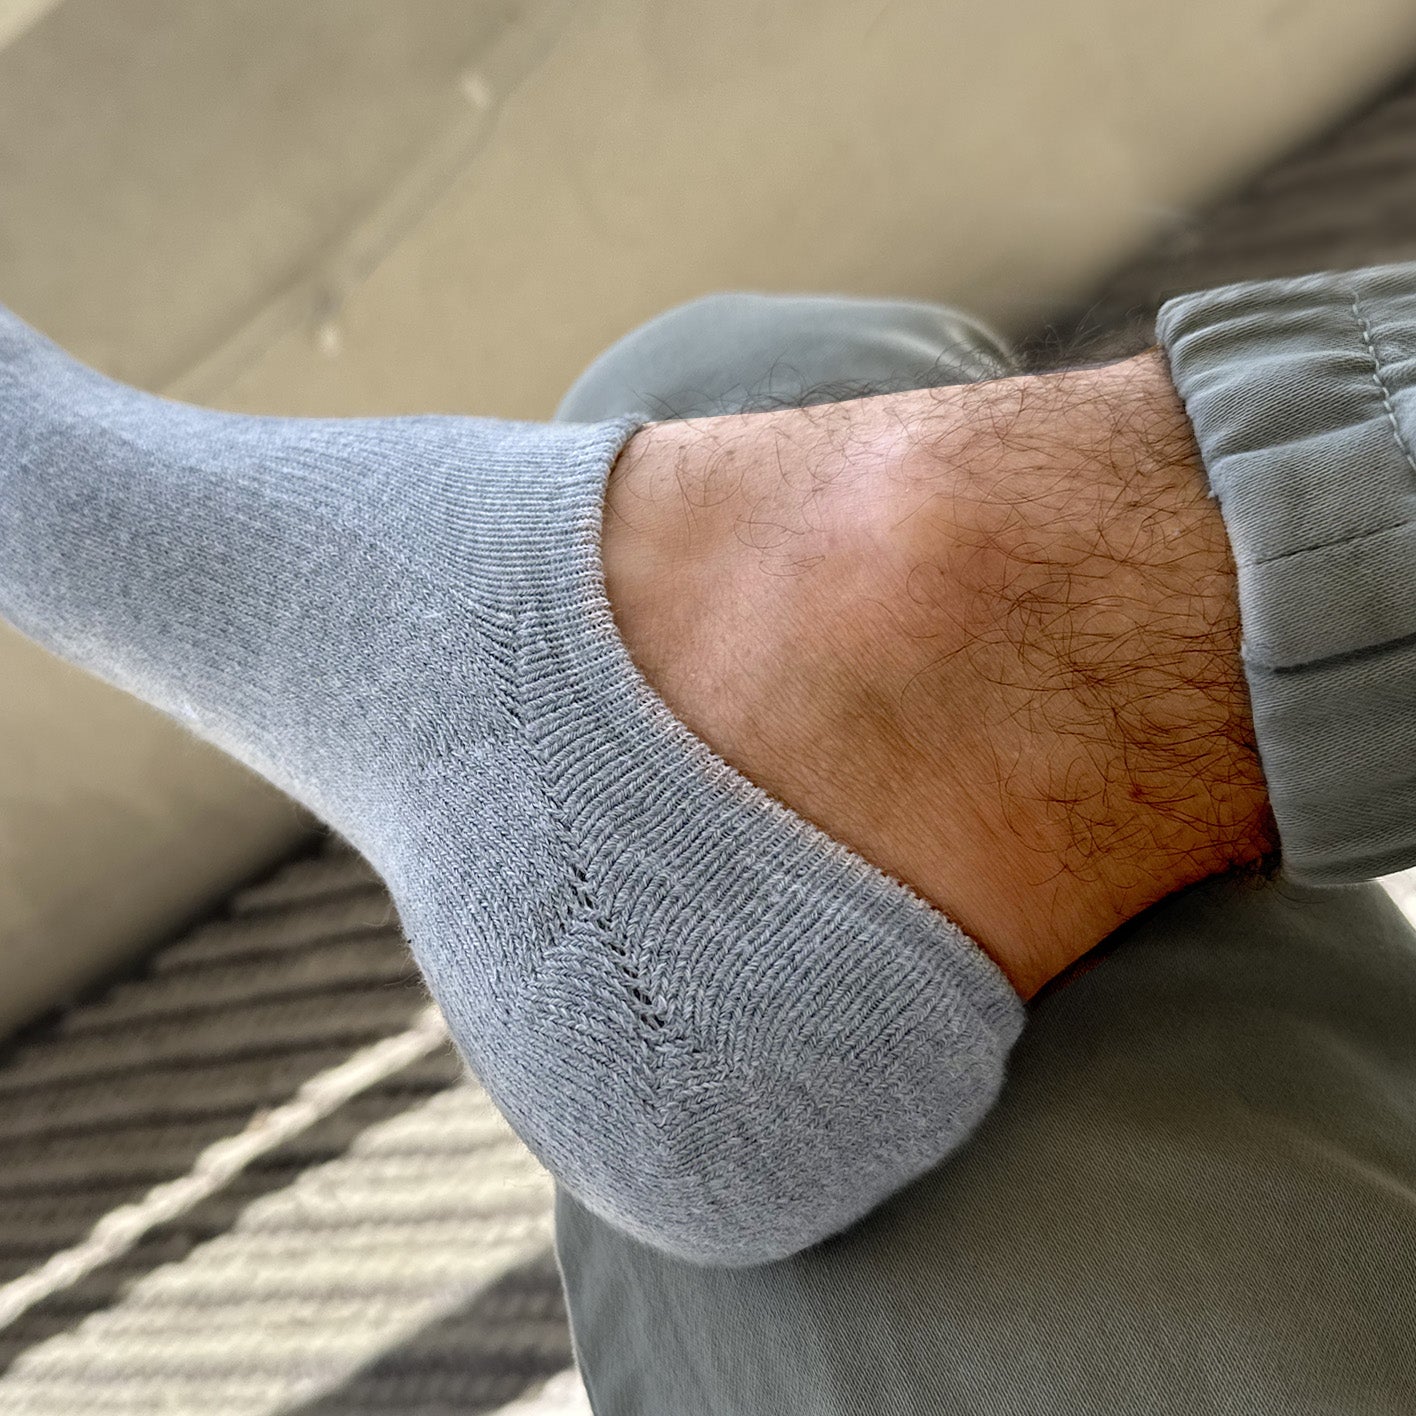 Photo of foot wearing a Skinnys Performance padded-heel sock